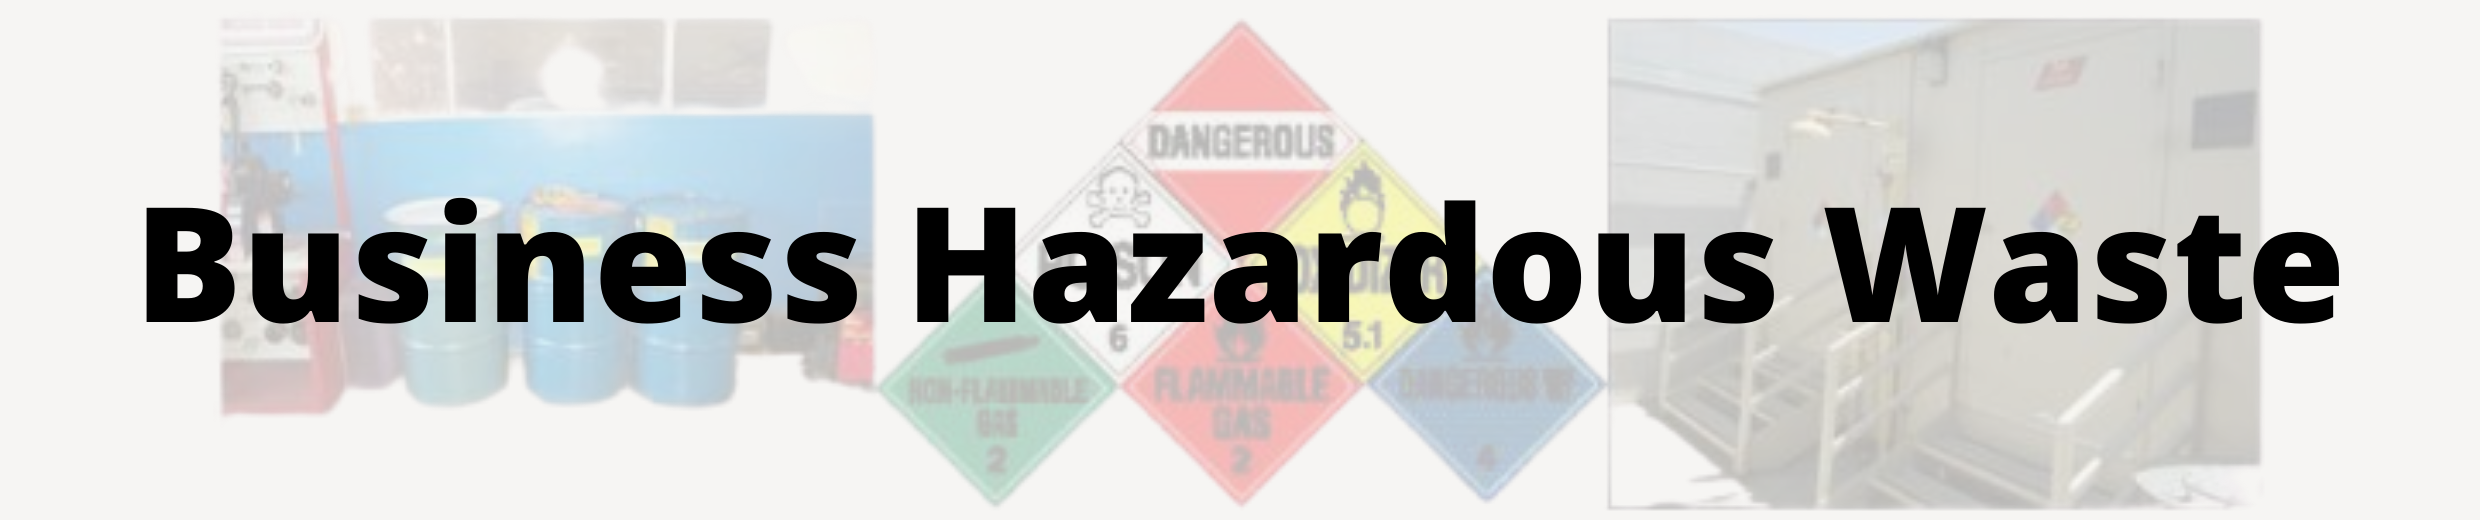 hazardous materials business plan riverside county